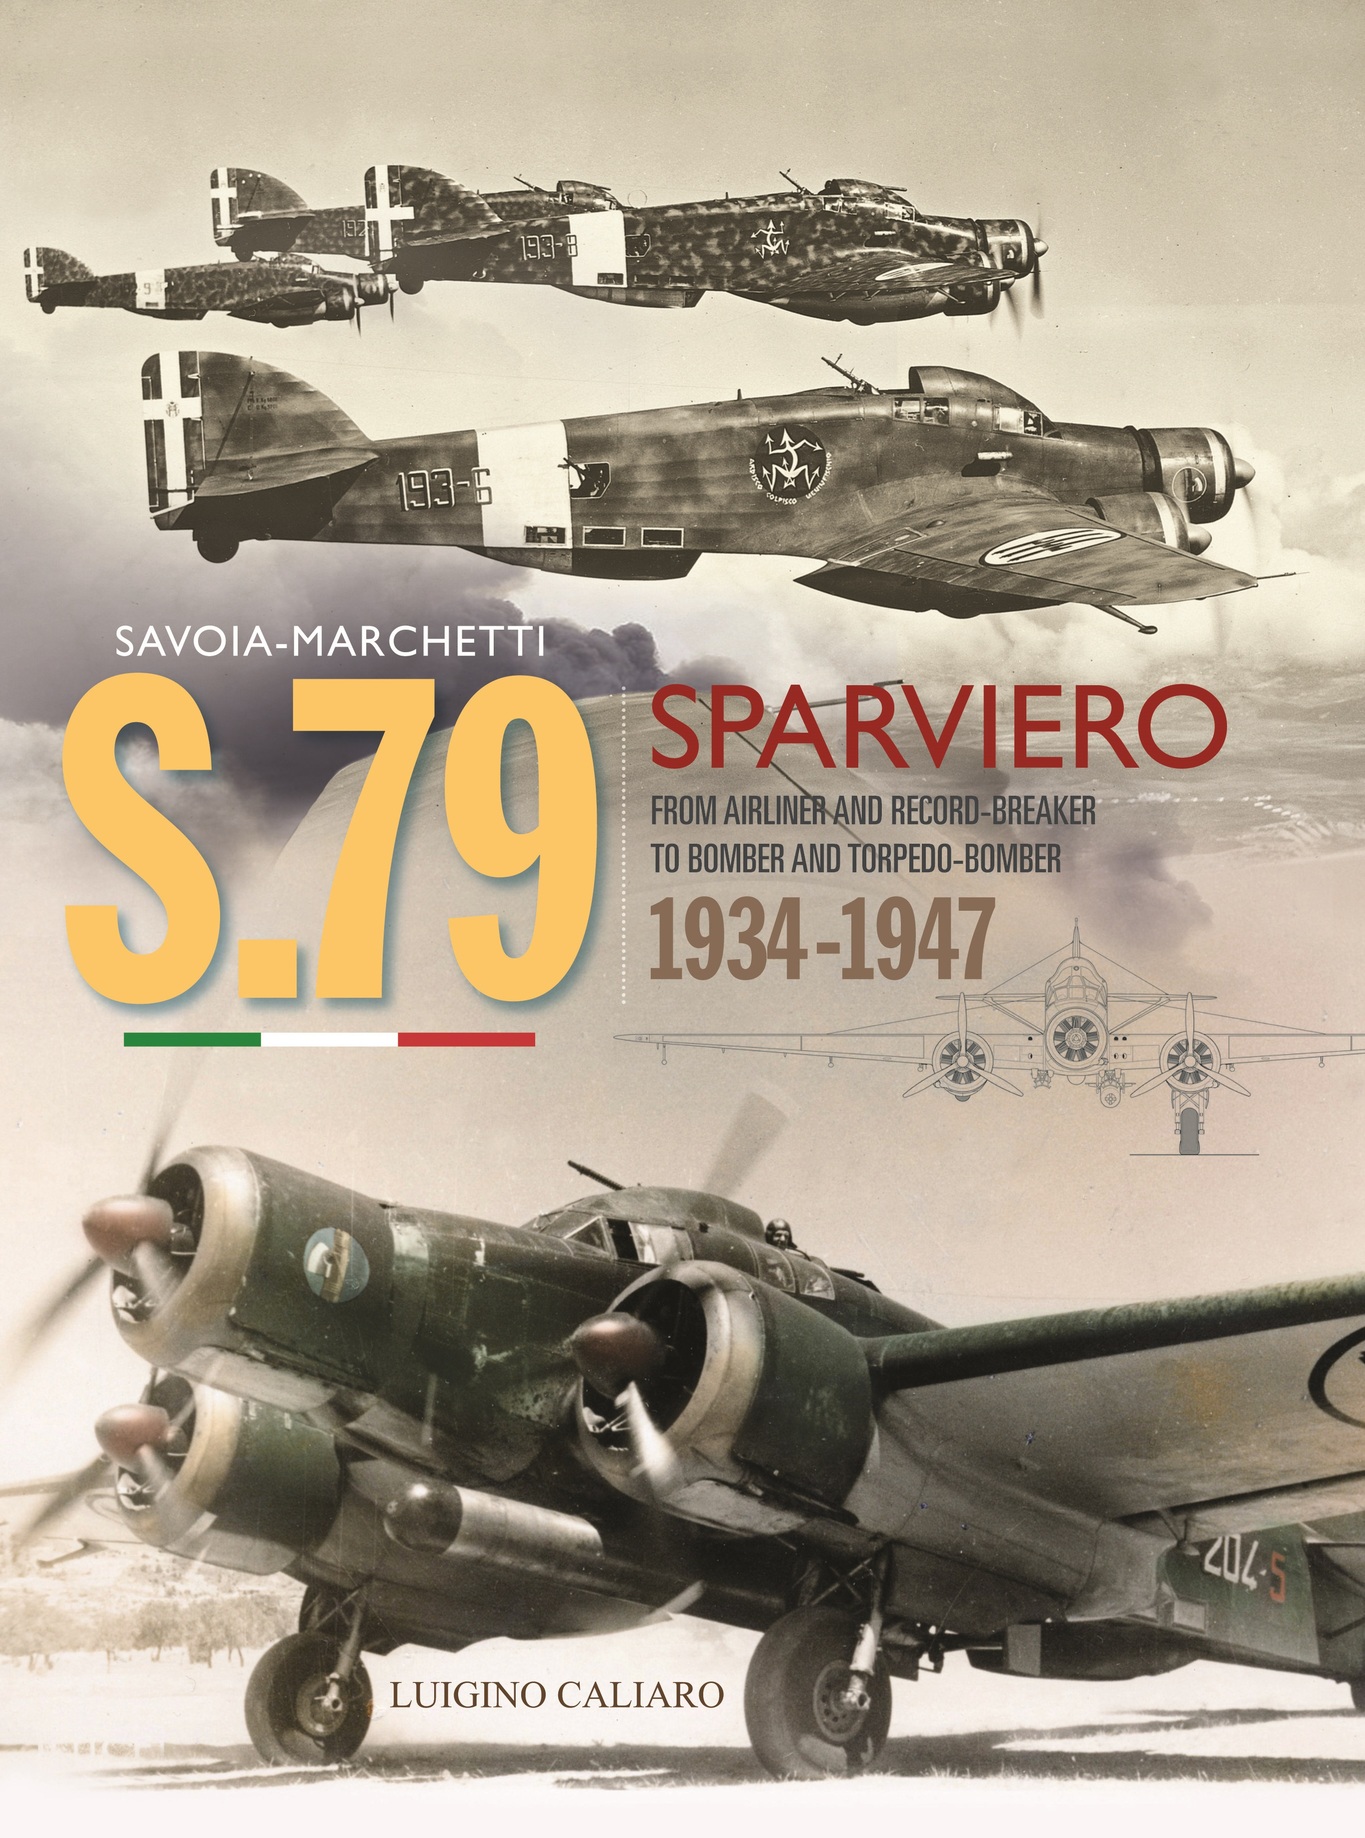 The Savoia-Marchetti S.79 Sparviero